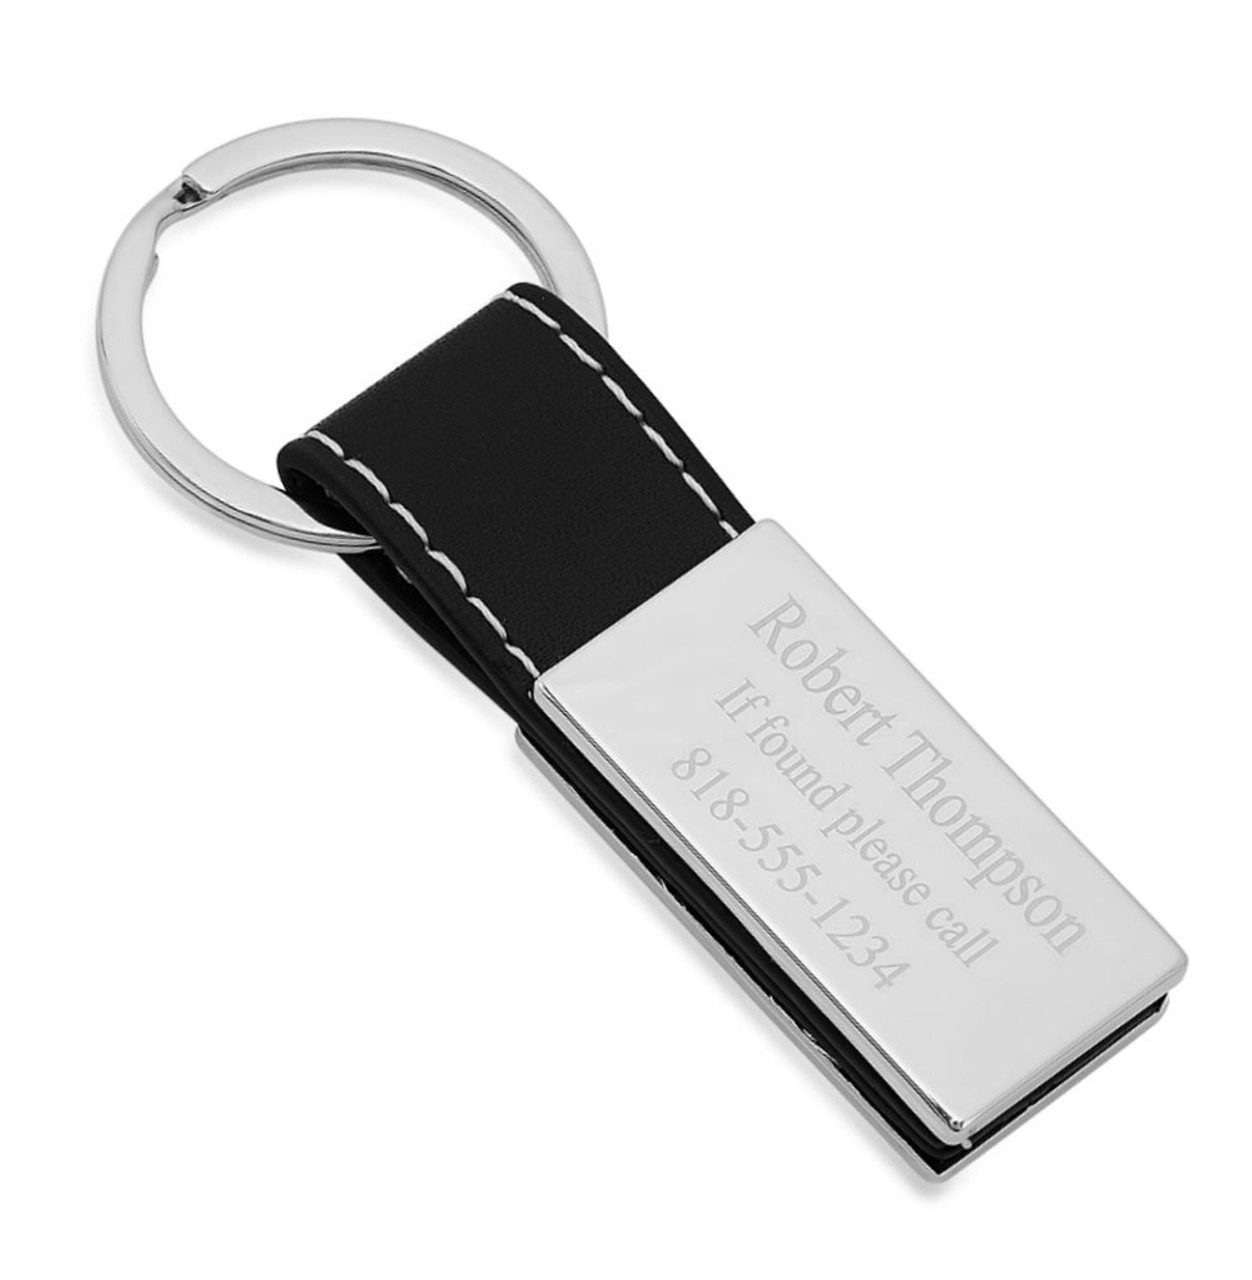 Personalized Quality Stainless Steel Custom Keychain 